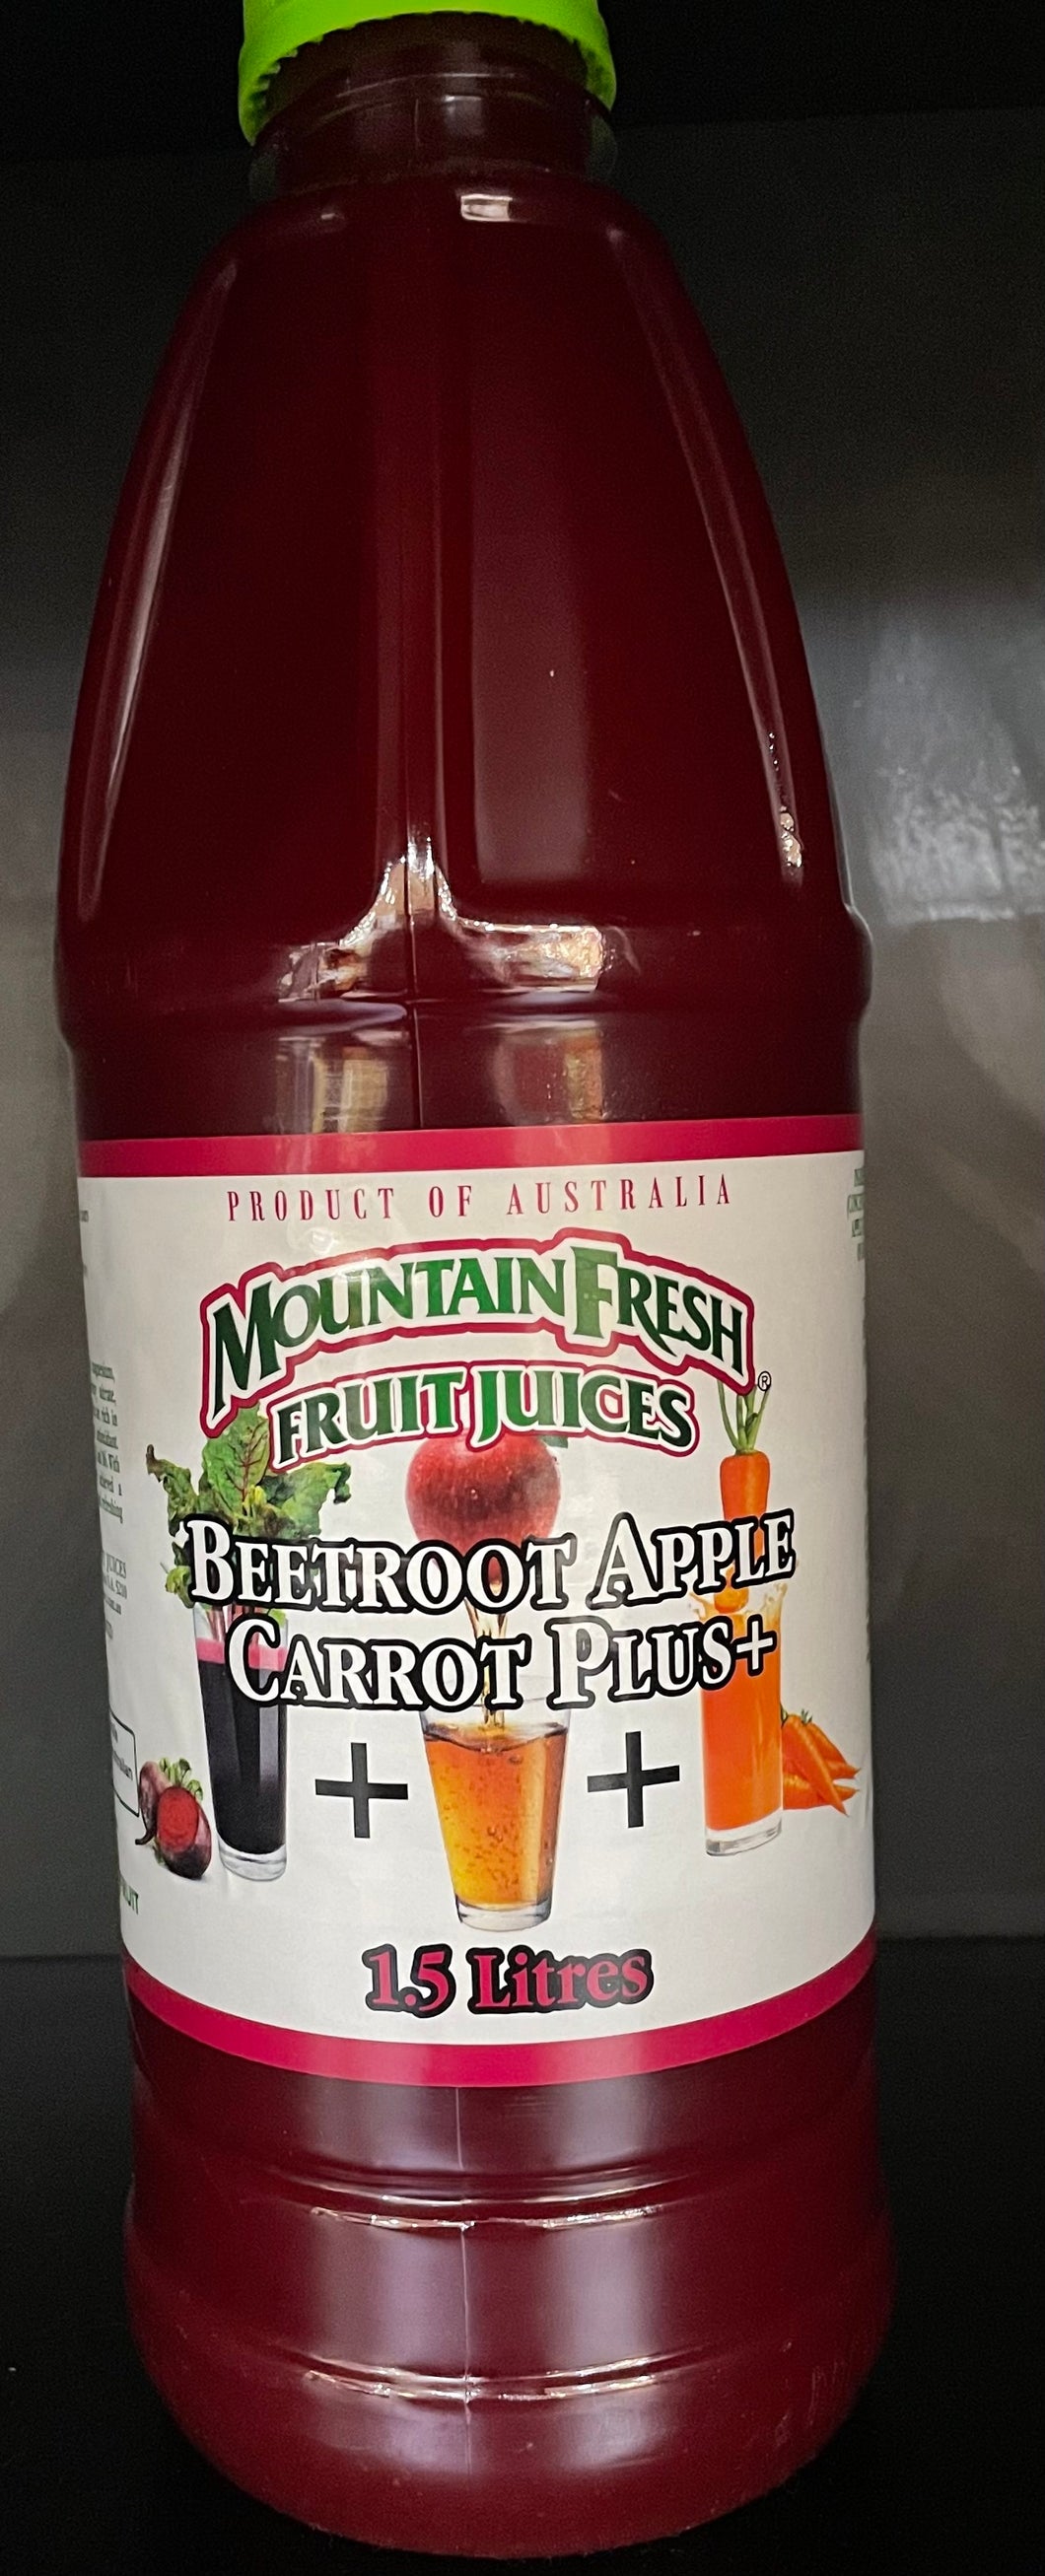 Juice Beetroot Apple Carrot Plus